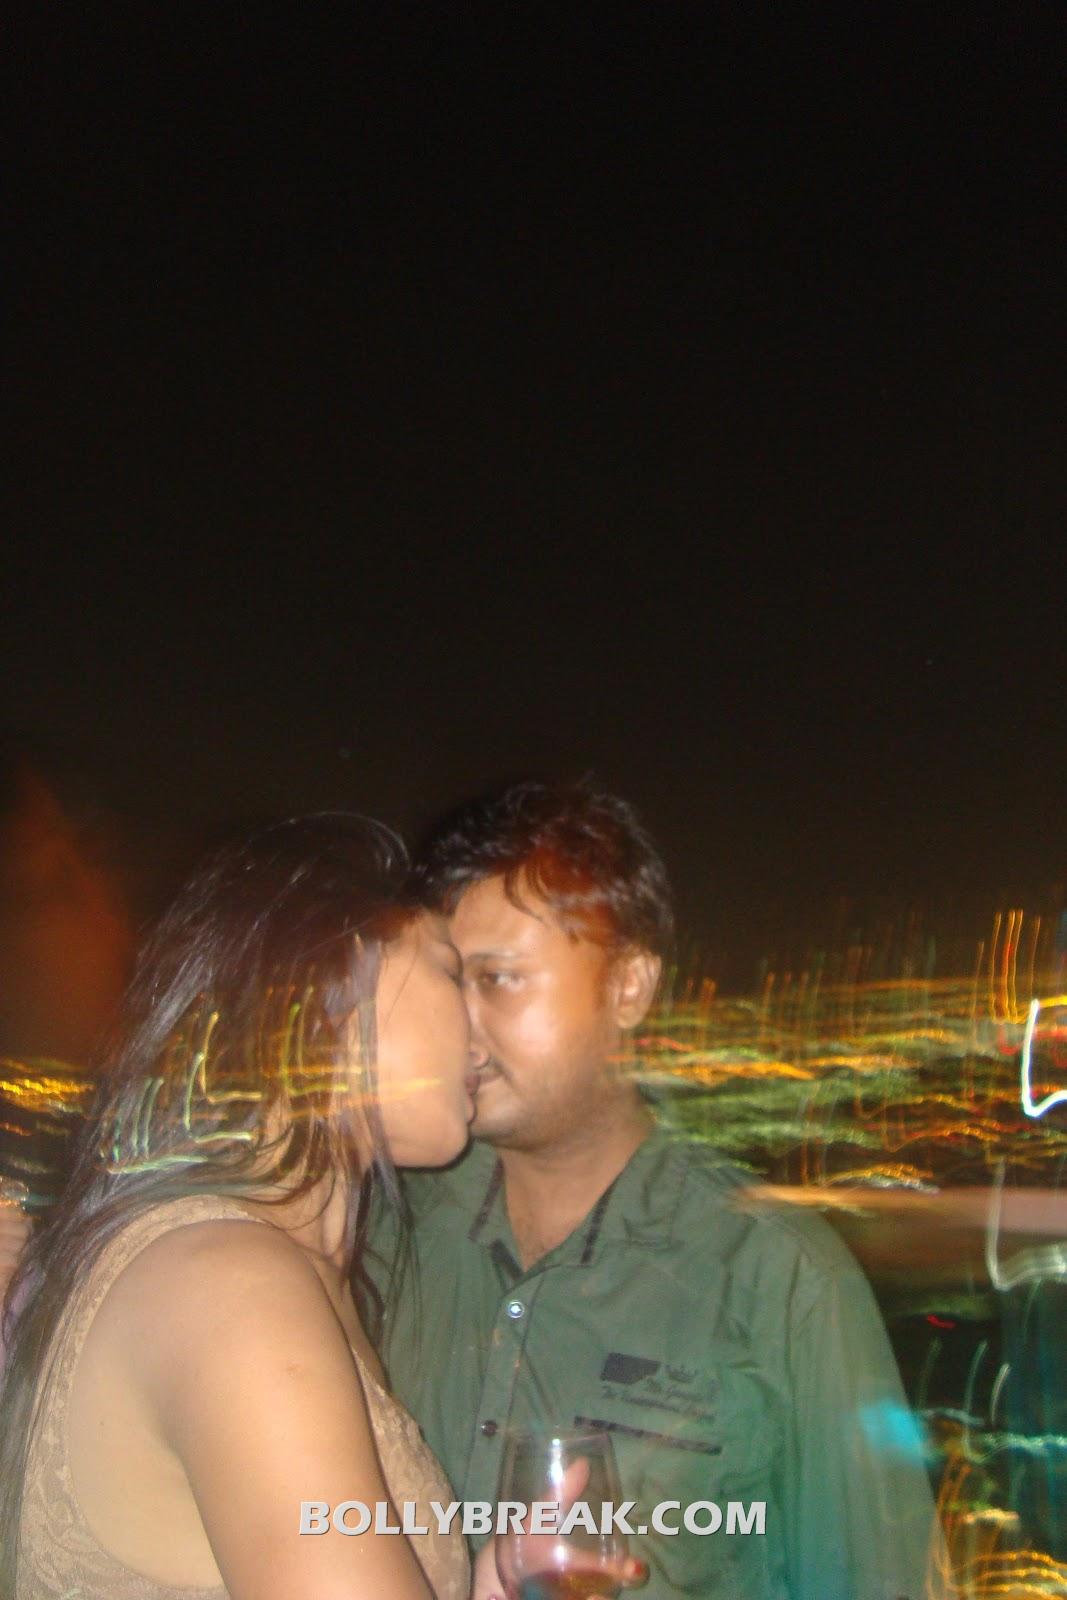  Veena Malik Hemant Madhukar kissing - (2) -  Veena Malik Hemant Madhukar Leaked Private Pics